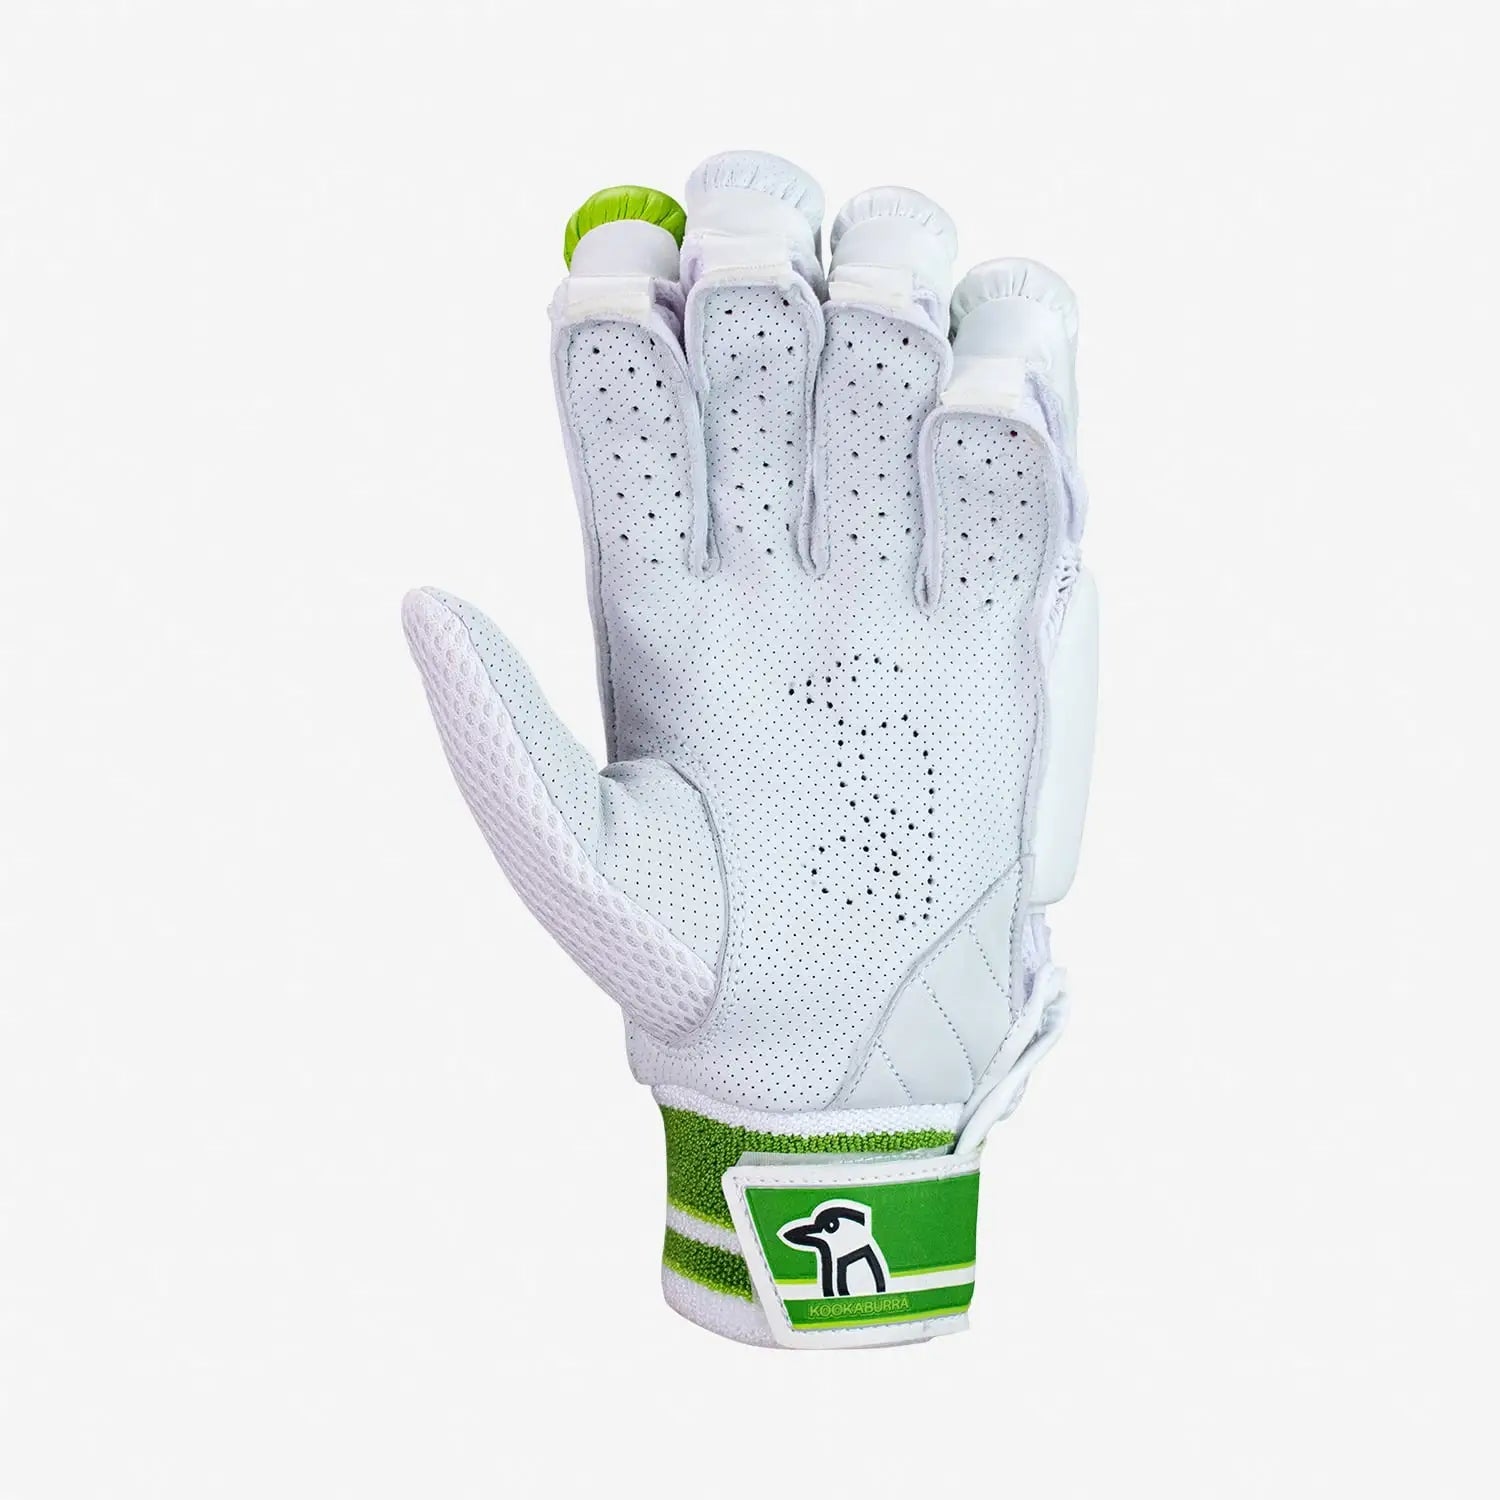 Kookaburra Kahuna 2.1 Cricket Batting Gloves Super Soft Palm - GLOVE - BATTING